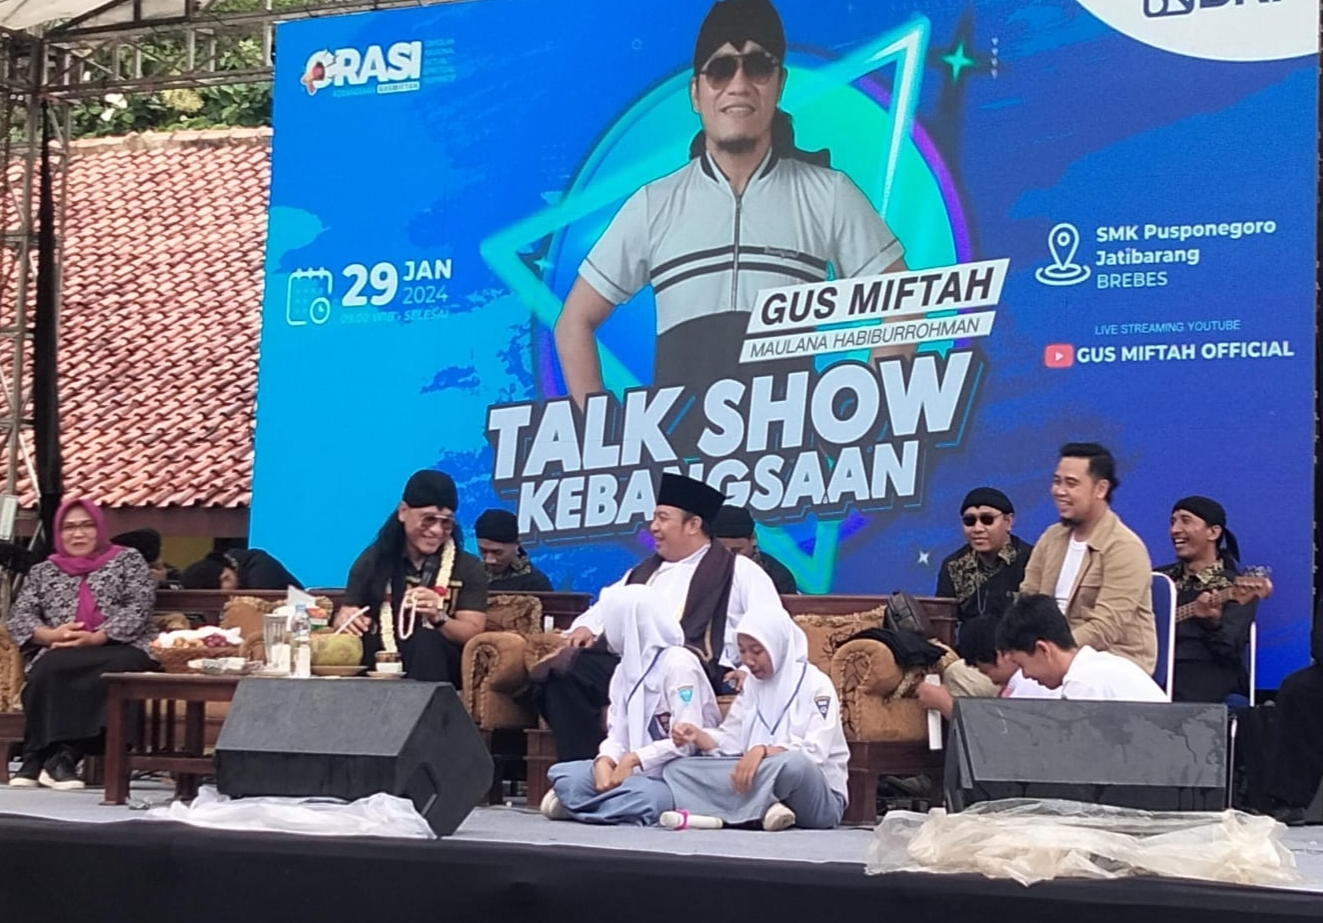 Gus Miftah Ajak Pelajar SMK Pusponegoro Jatibarang, 'Ngaji Wawasan Kebangsaan' Agar Tidak Mudah Terprovokasi